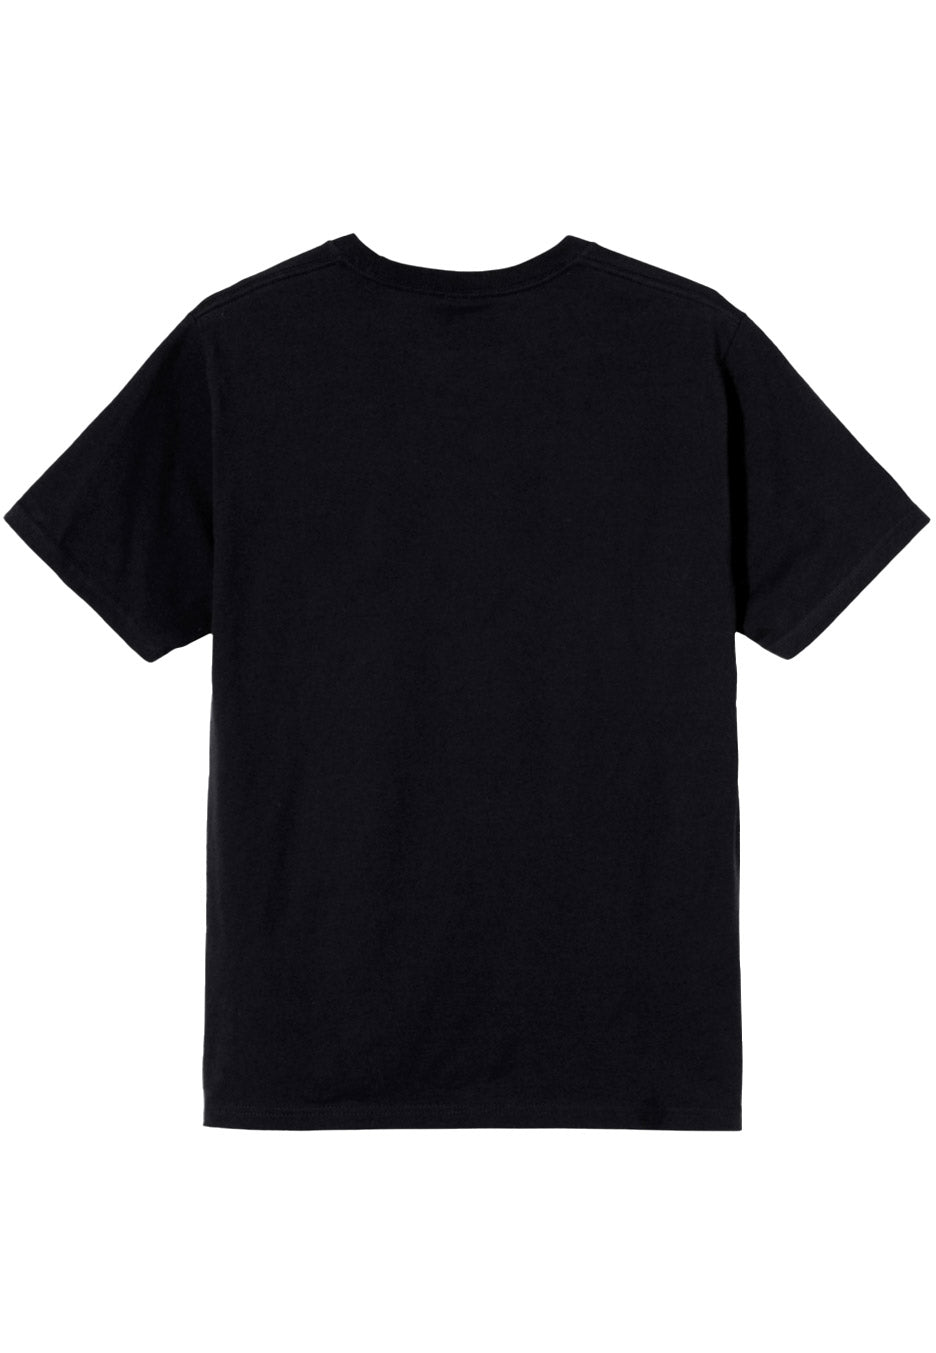 Eluveitie - Celtic Tree - T-Shirt